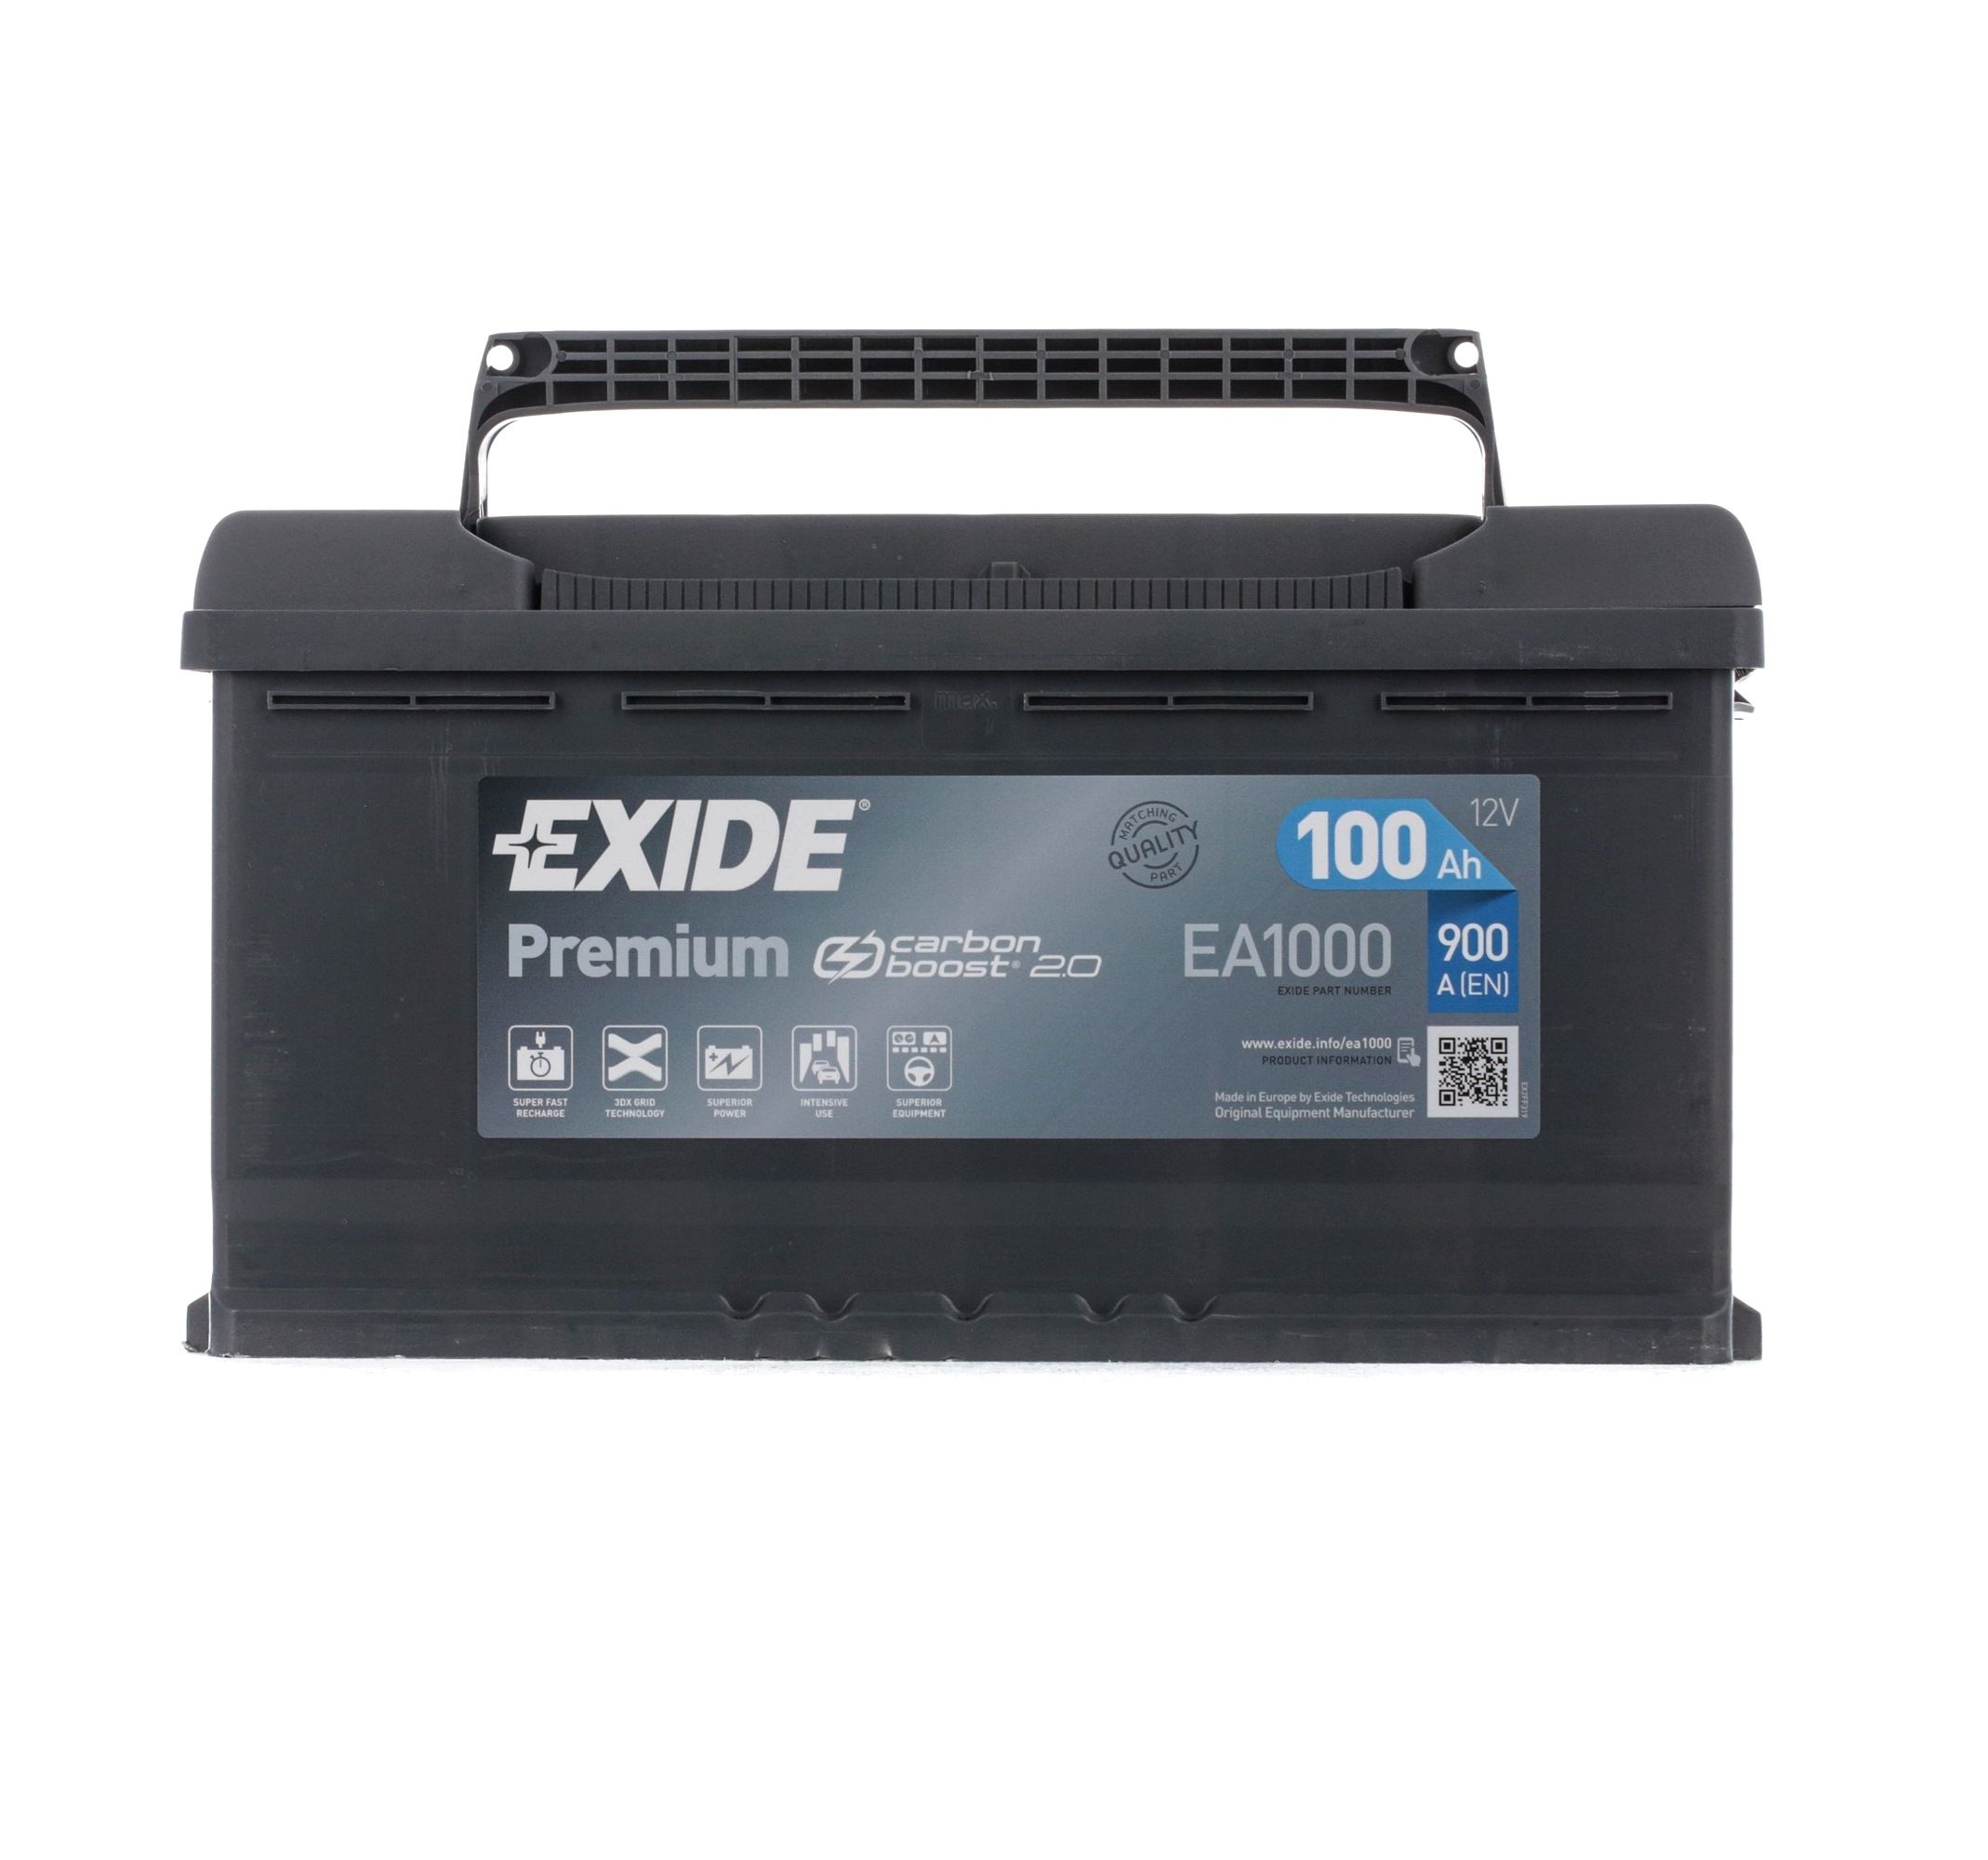 60038 EXIDE PREMIUM 12V 100Ah 900A Bleiakkumulator Kälteprüfstrom EN: 900A, Spannung: 12V Batterie EA1000 günstig kaufen